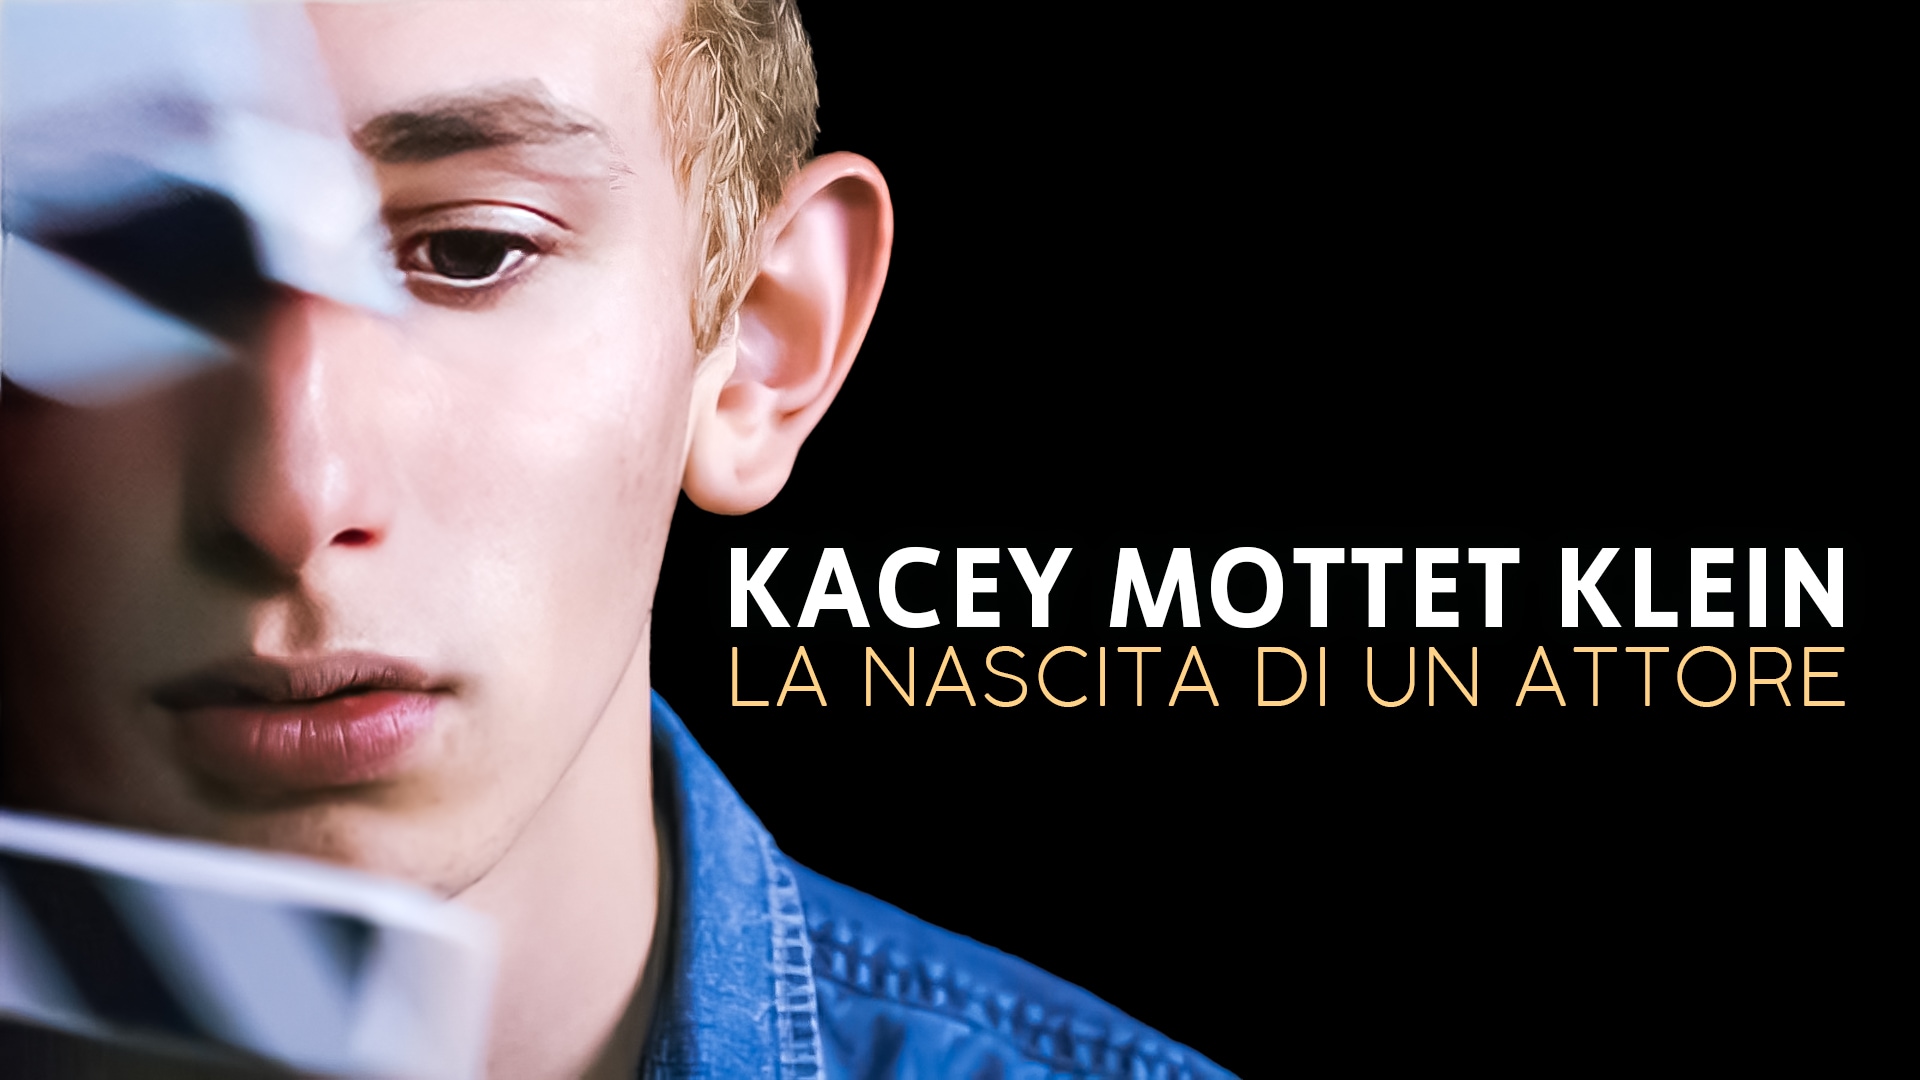 Kacey Mottet Klein, la nascita di un attore